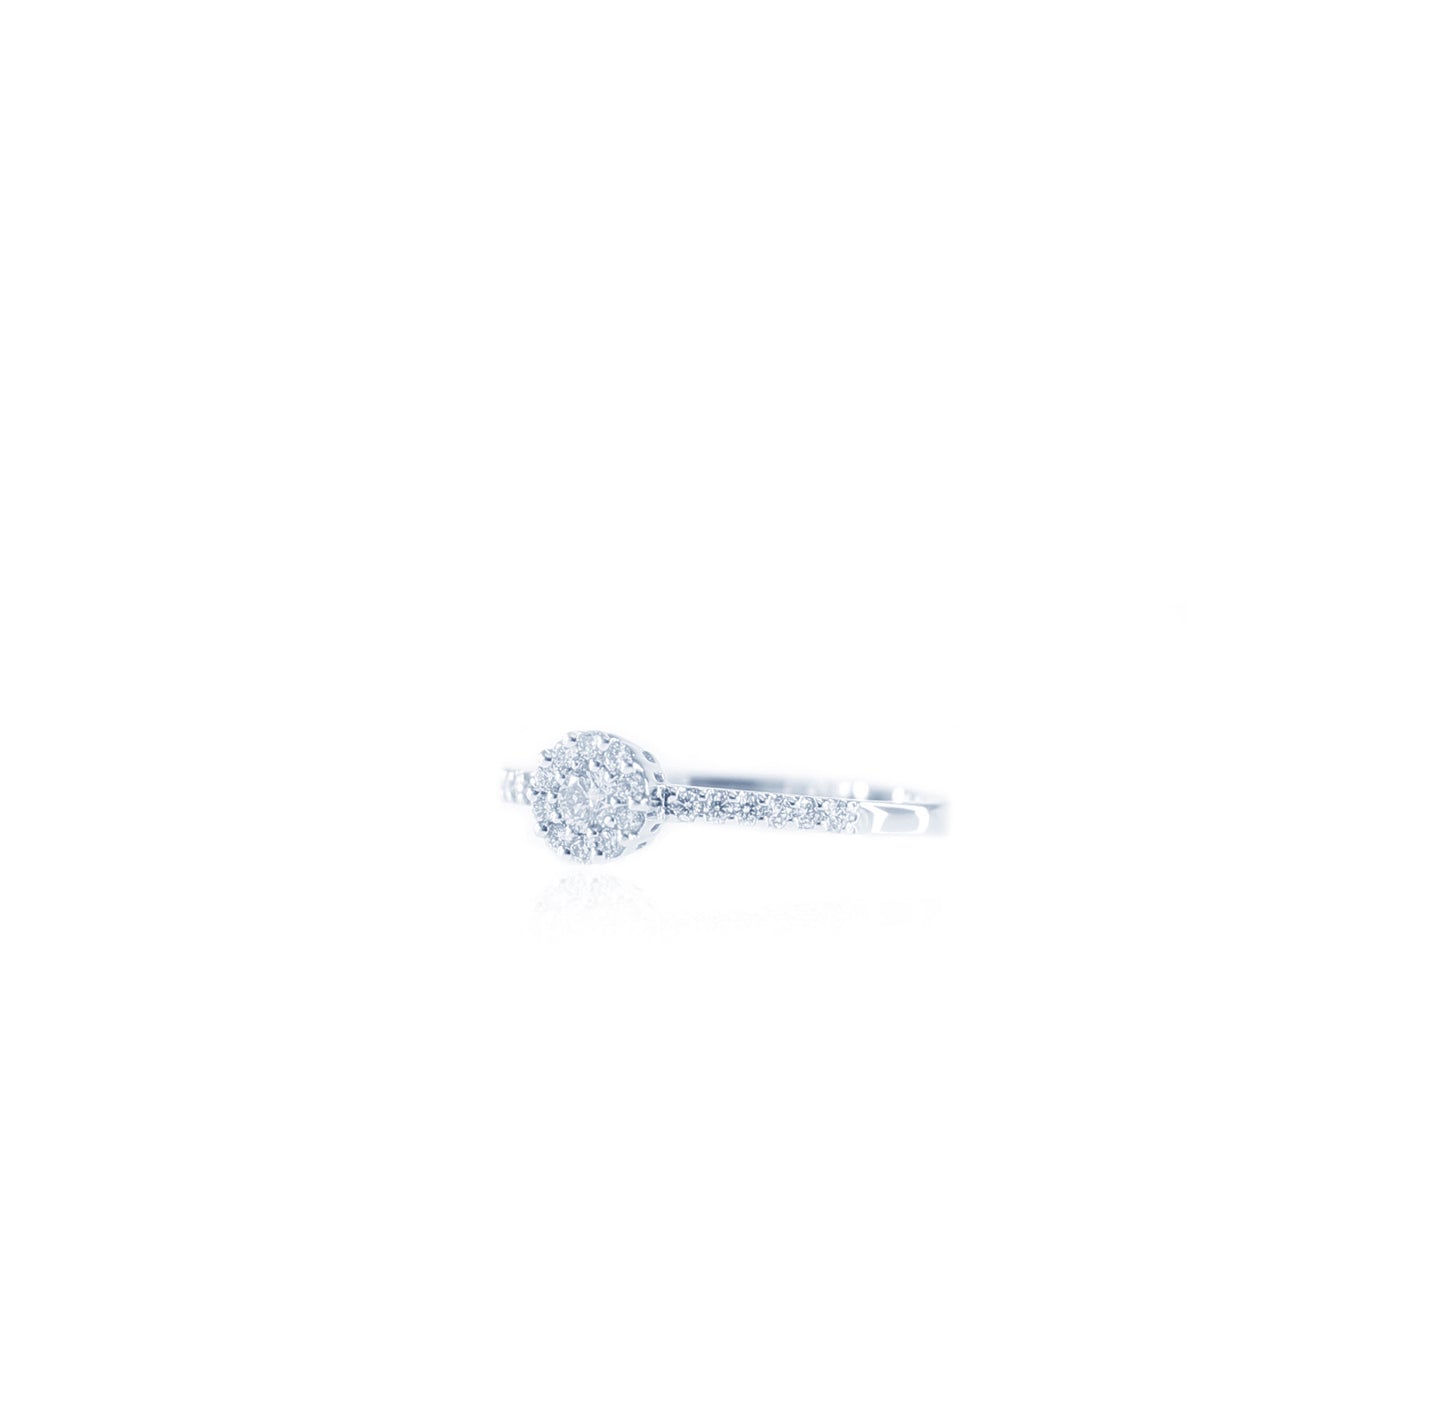 Everlasting Petite Halo Diamond Ring in 18K White Gold